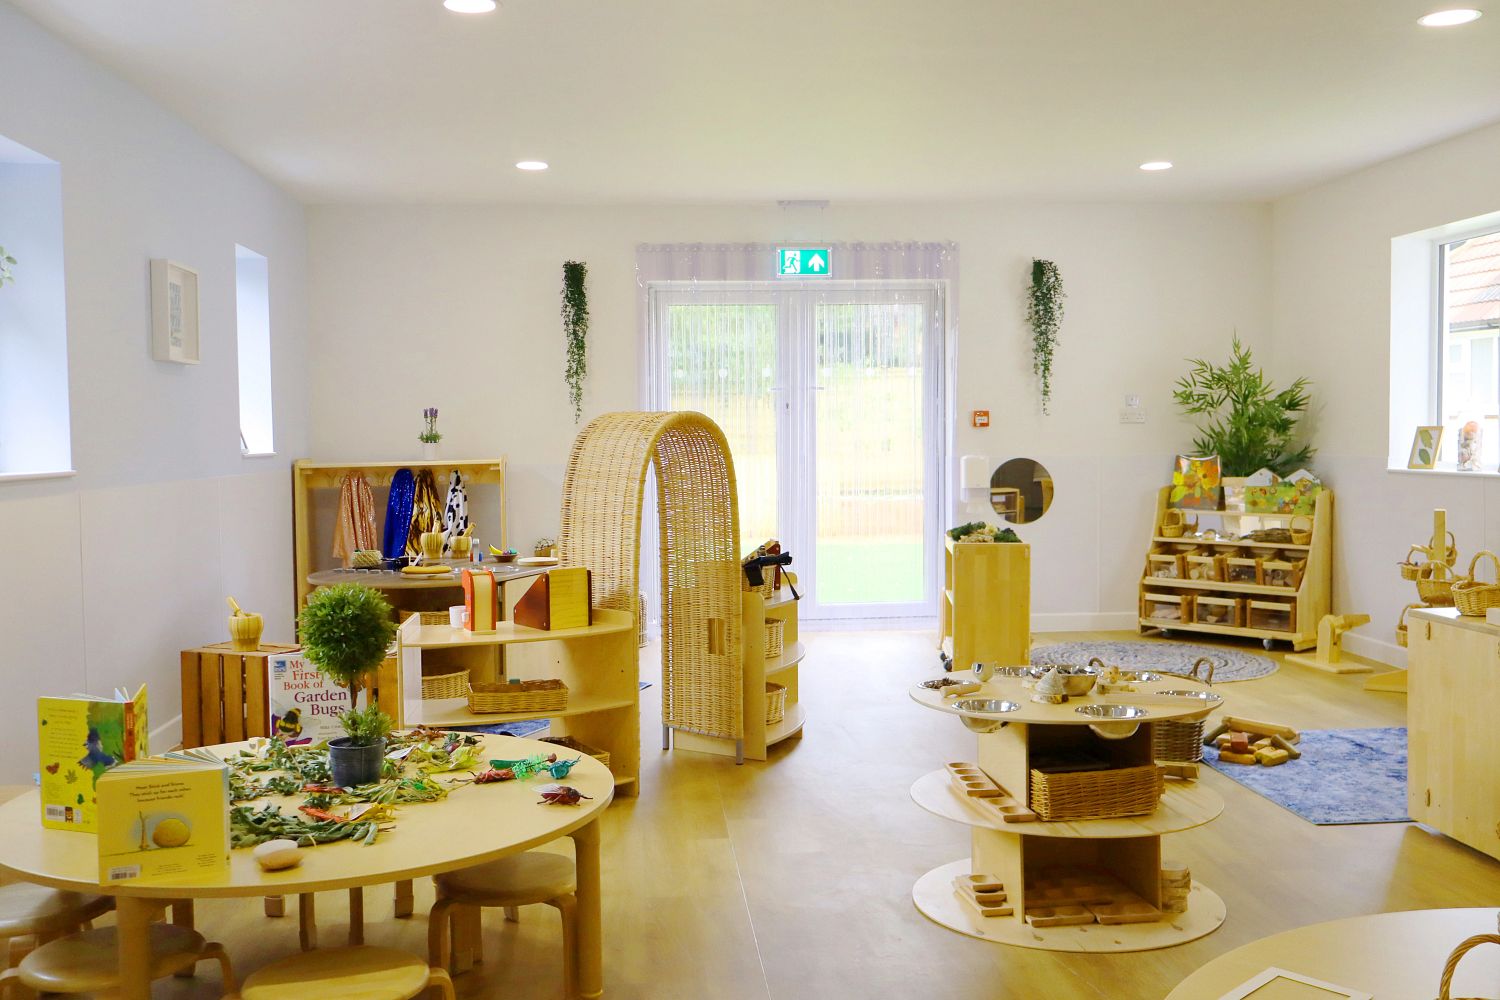 Cedar House Day Nursery and preschool - preschool room